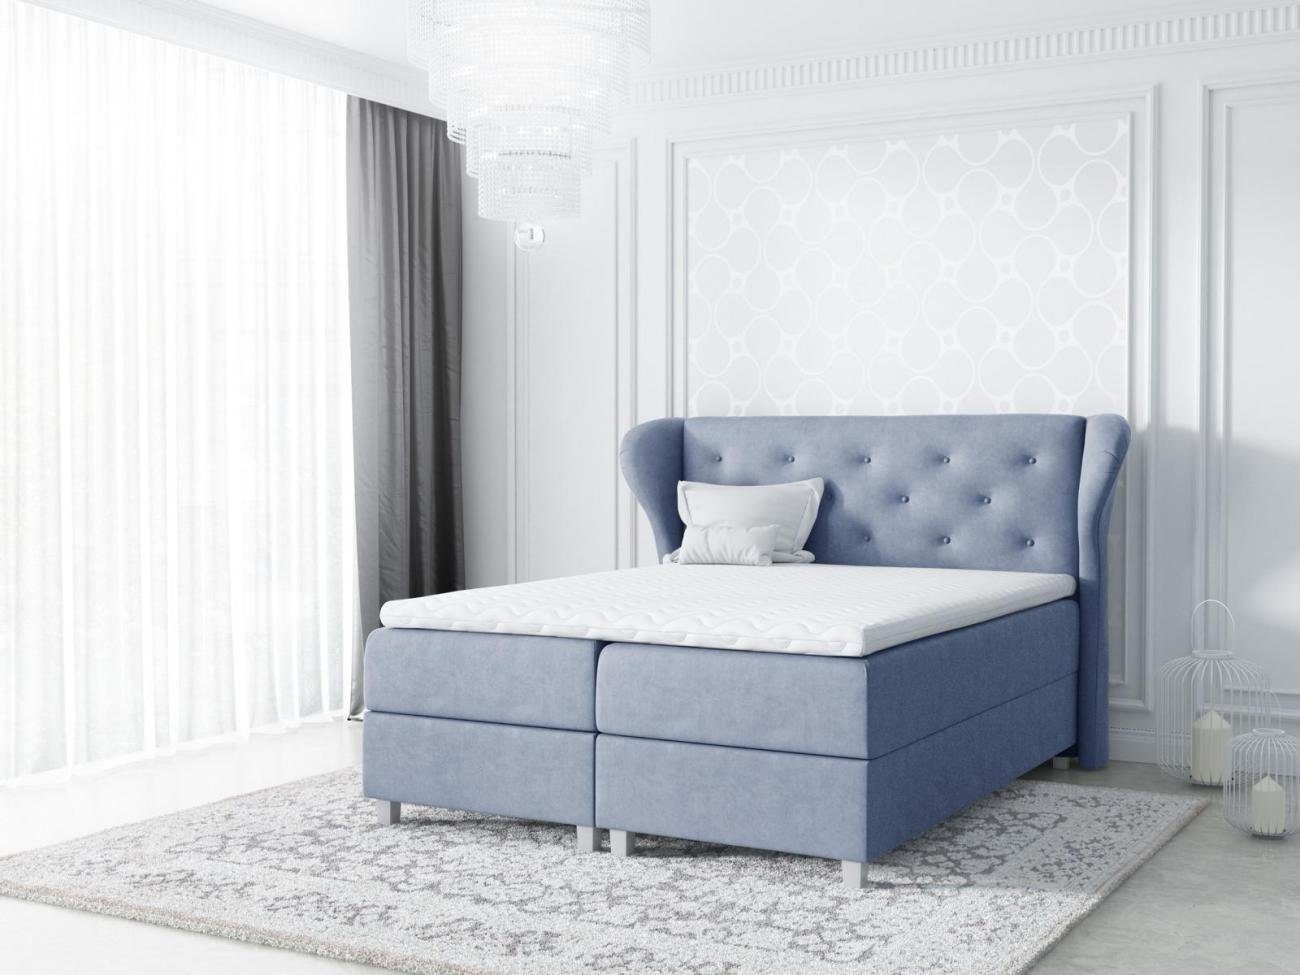 JVmoebel Bett, Modern Bett Design Doppel Hotel Stoff Textil Boxspringbett Blau